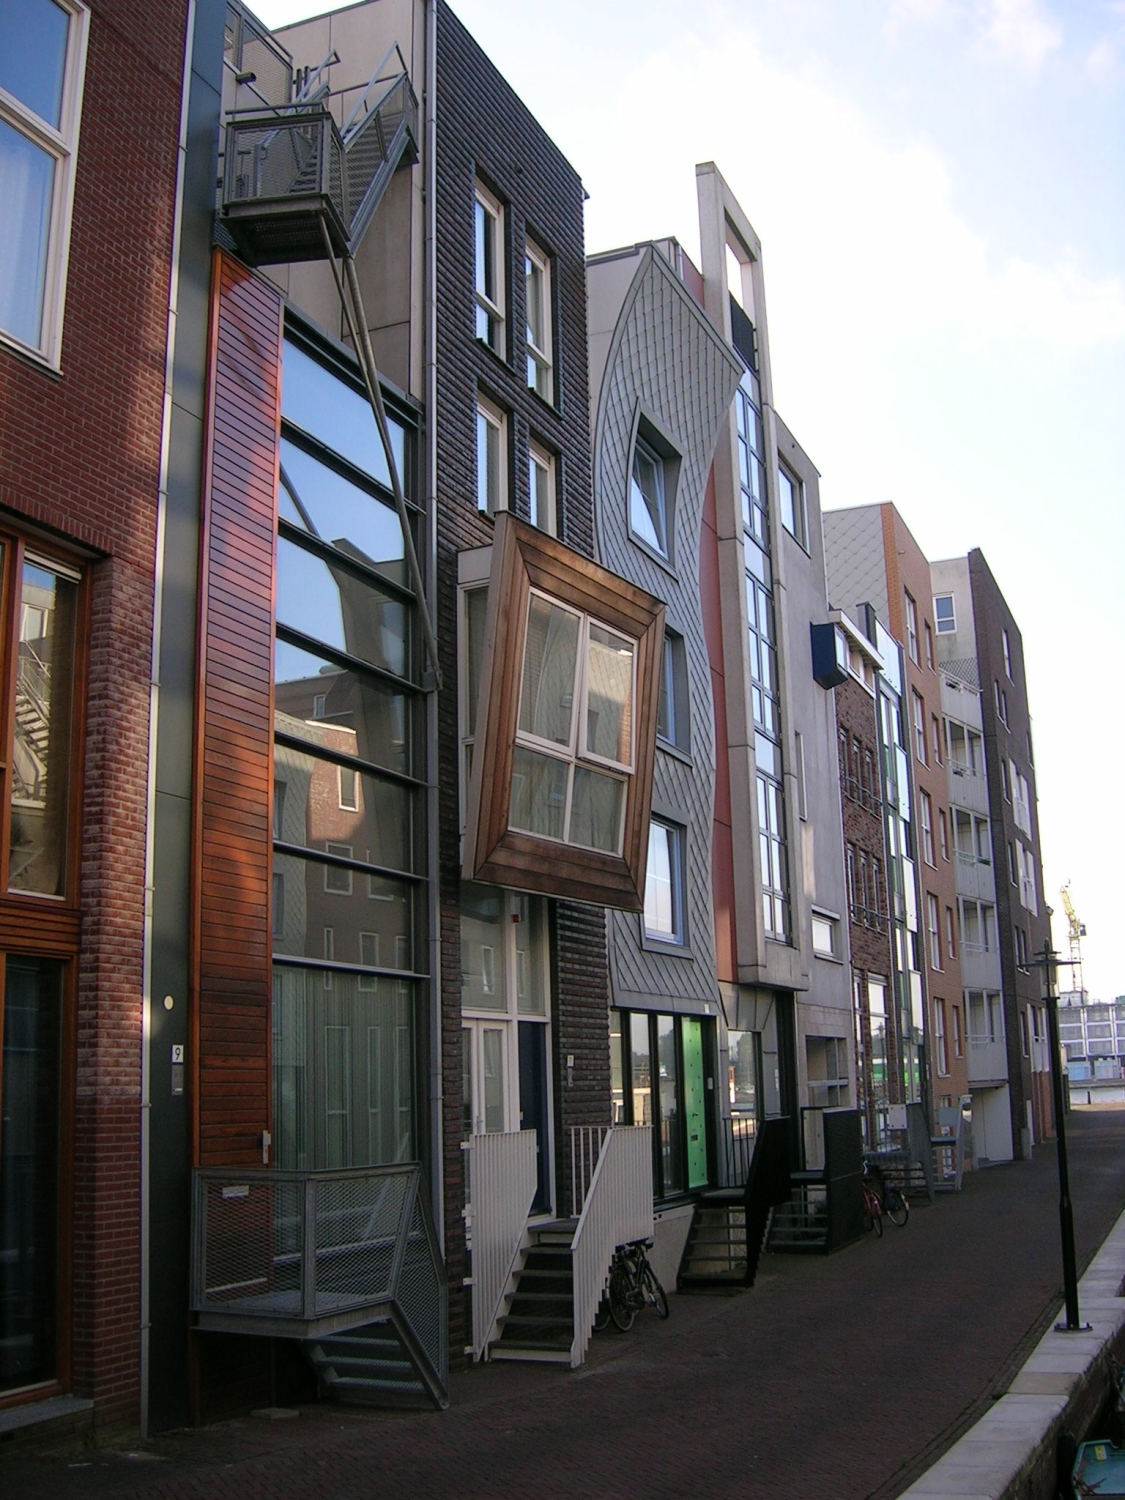 Houses in Amsterdam, the inspiration for Blue Star Corner in Emeryville, Ca.